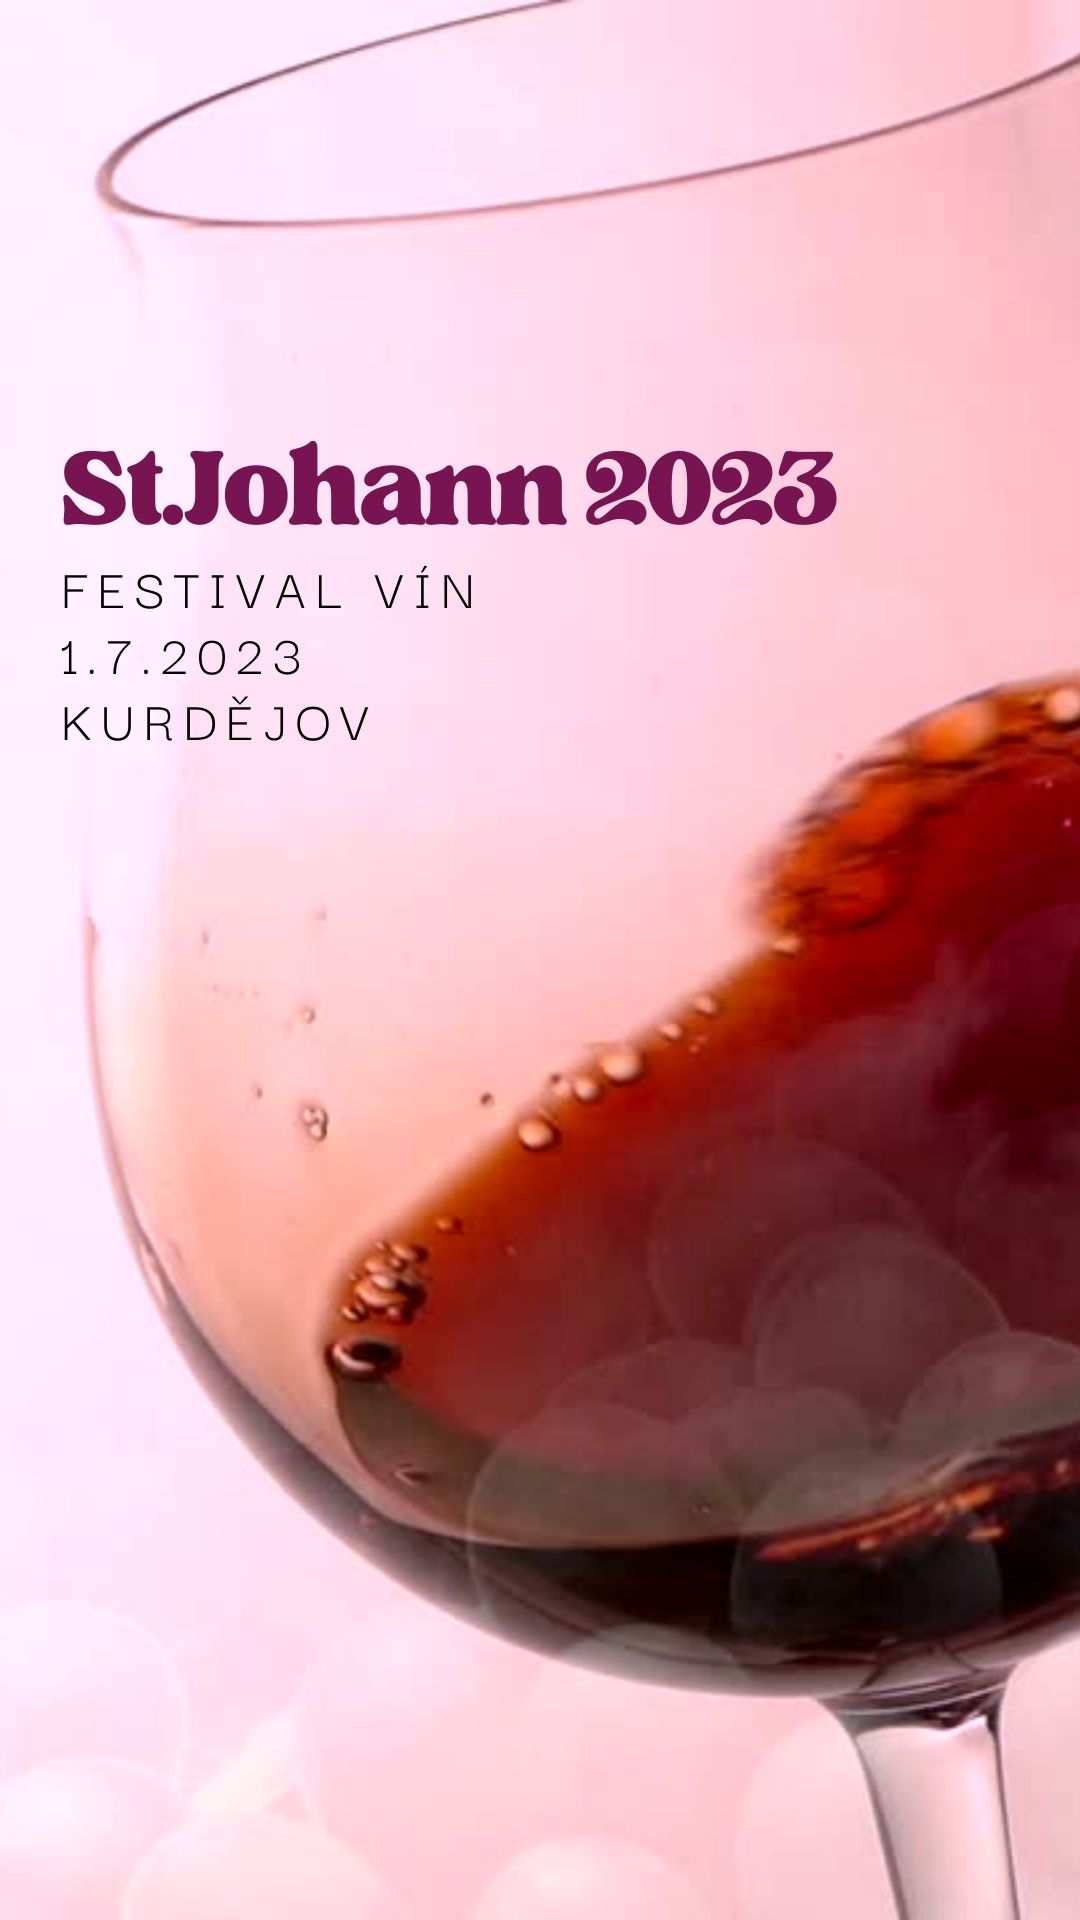 St. Johann Festival vín 2023 | Kurdějov | 1. 7. 2023